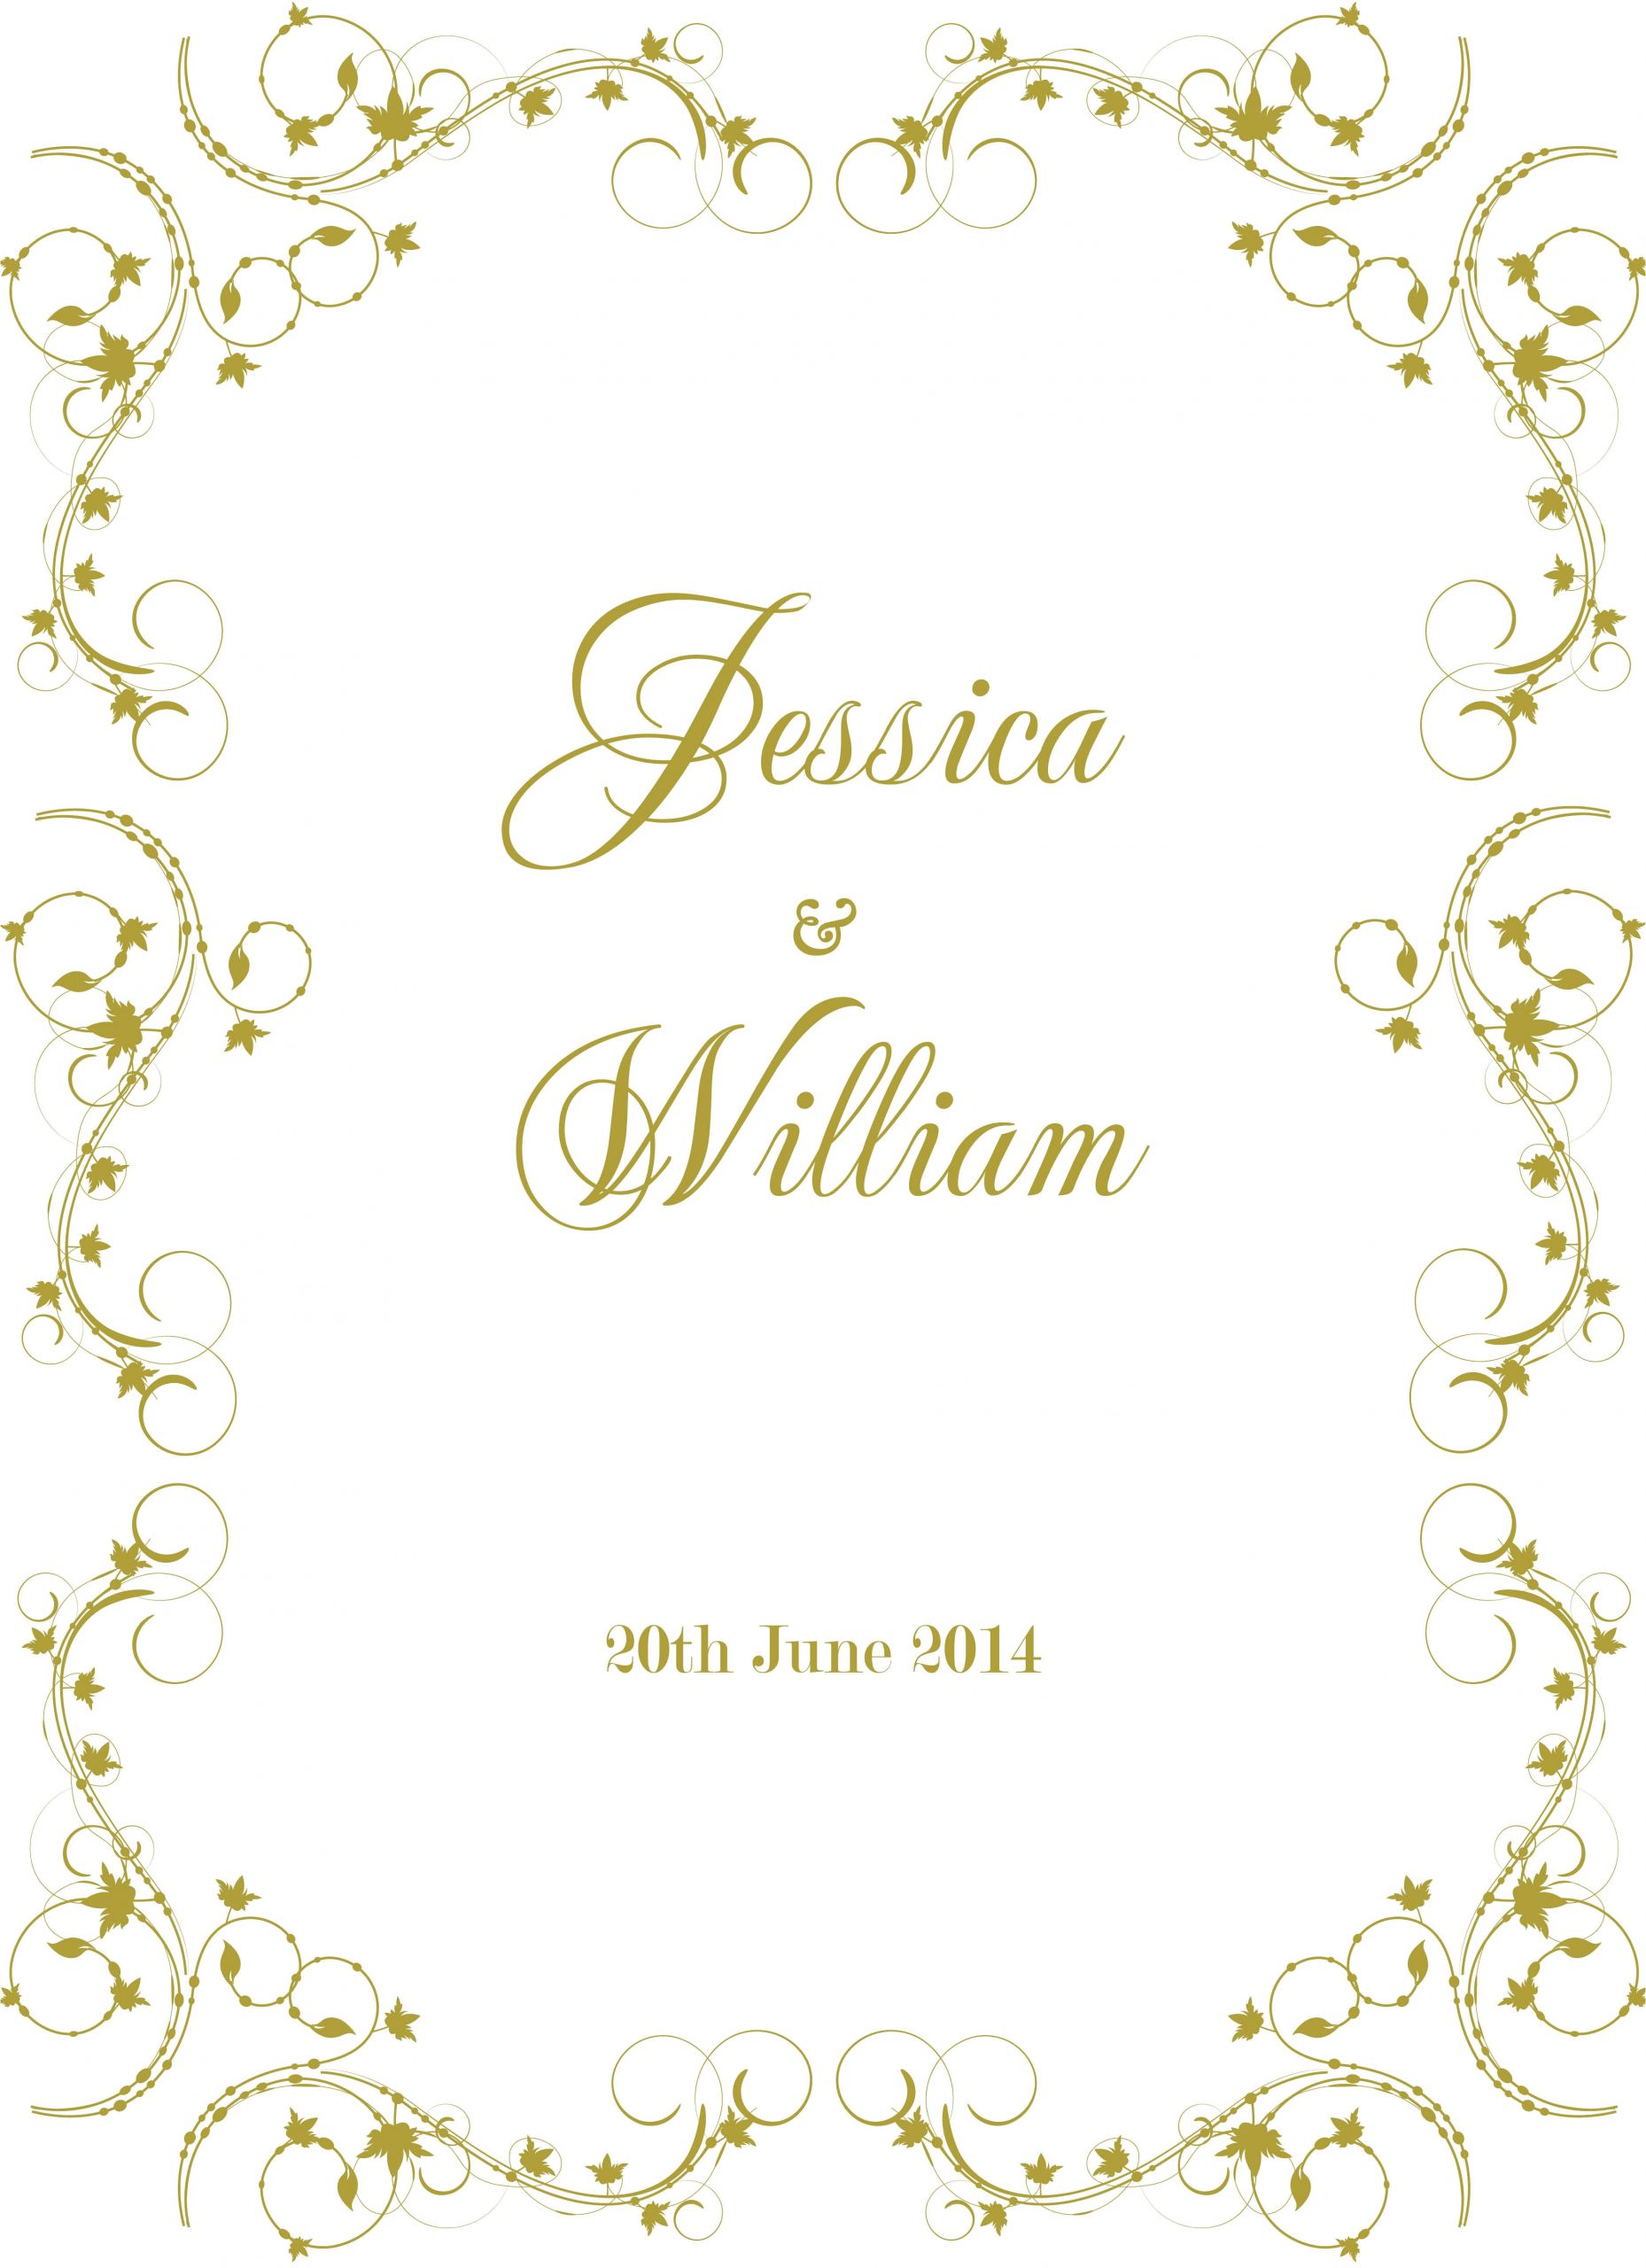 Border Design for Wedding Card Wedding Border Designs with Images Photo Wedding